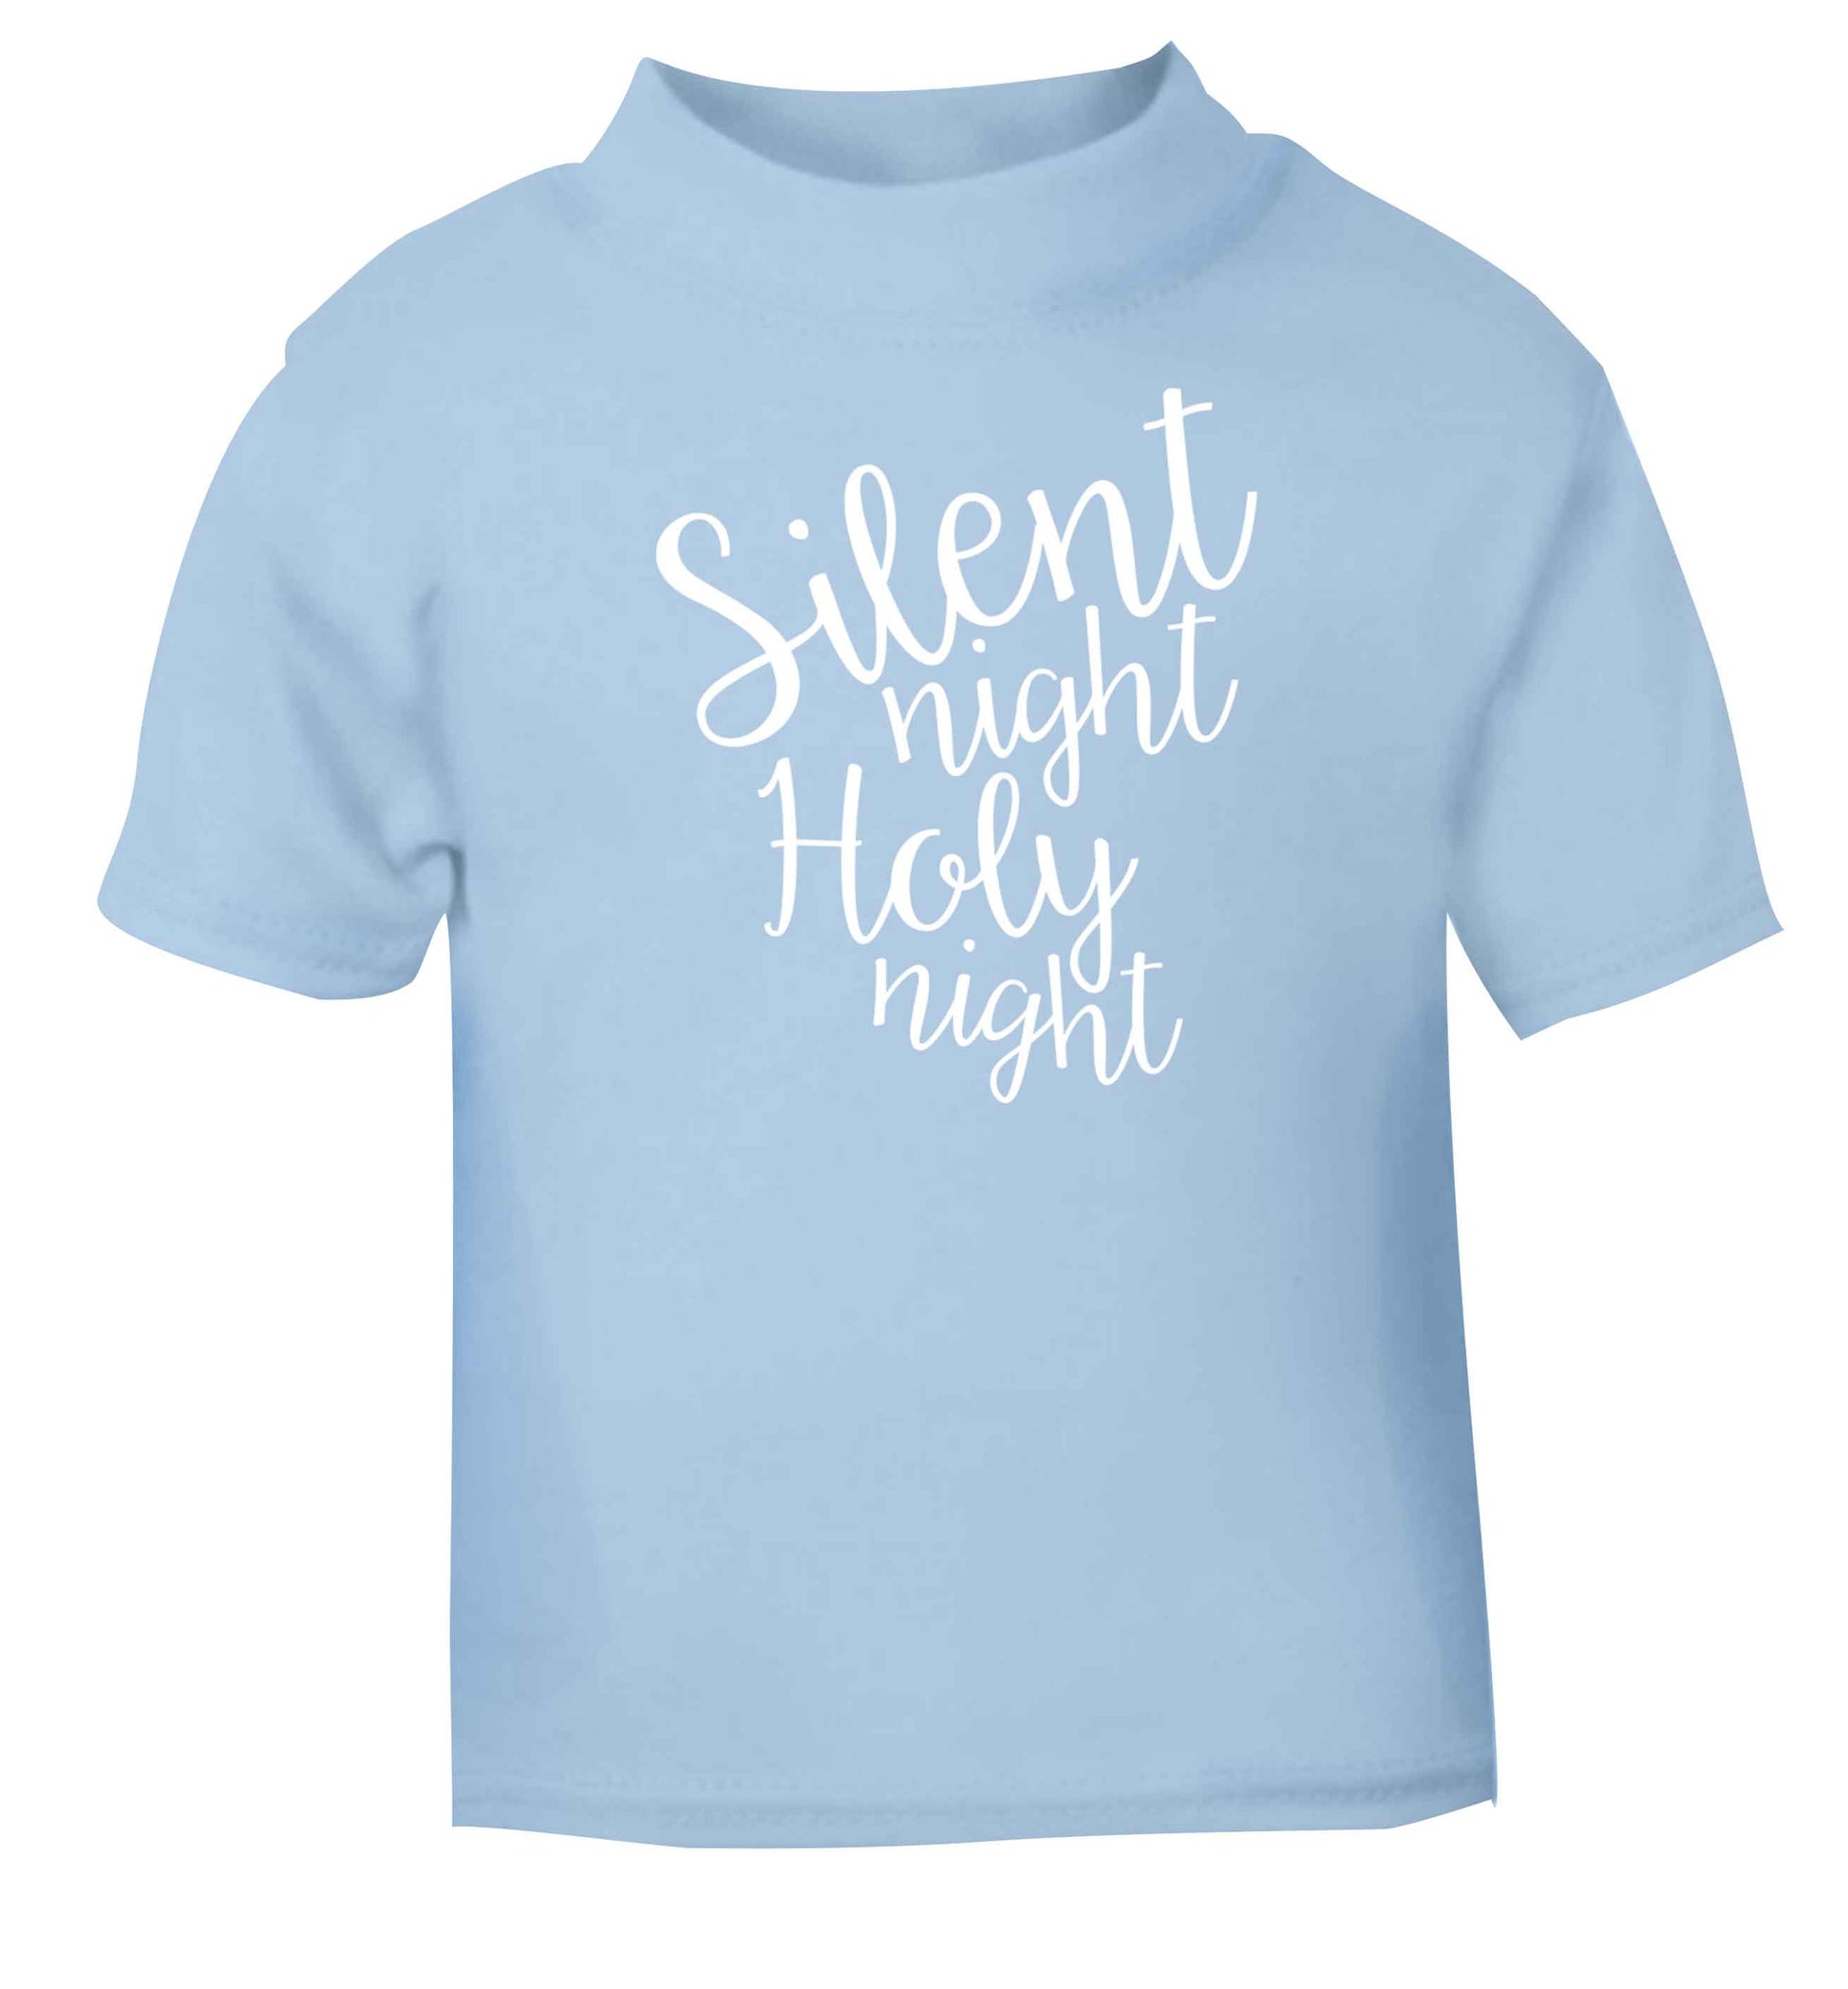 Silent night holy night light blue baby toddler Tshirt 2 Years